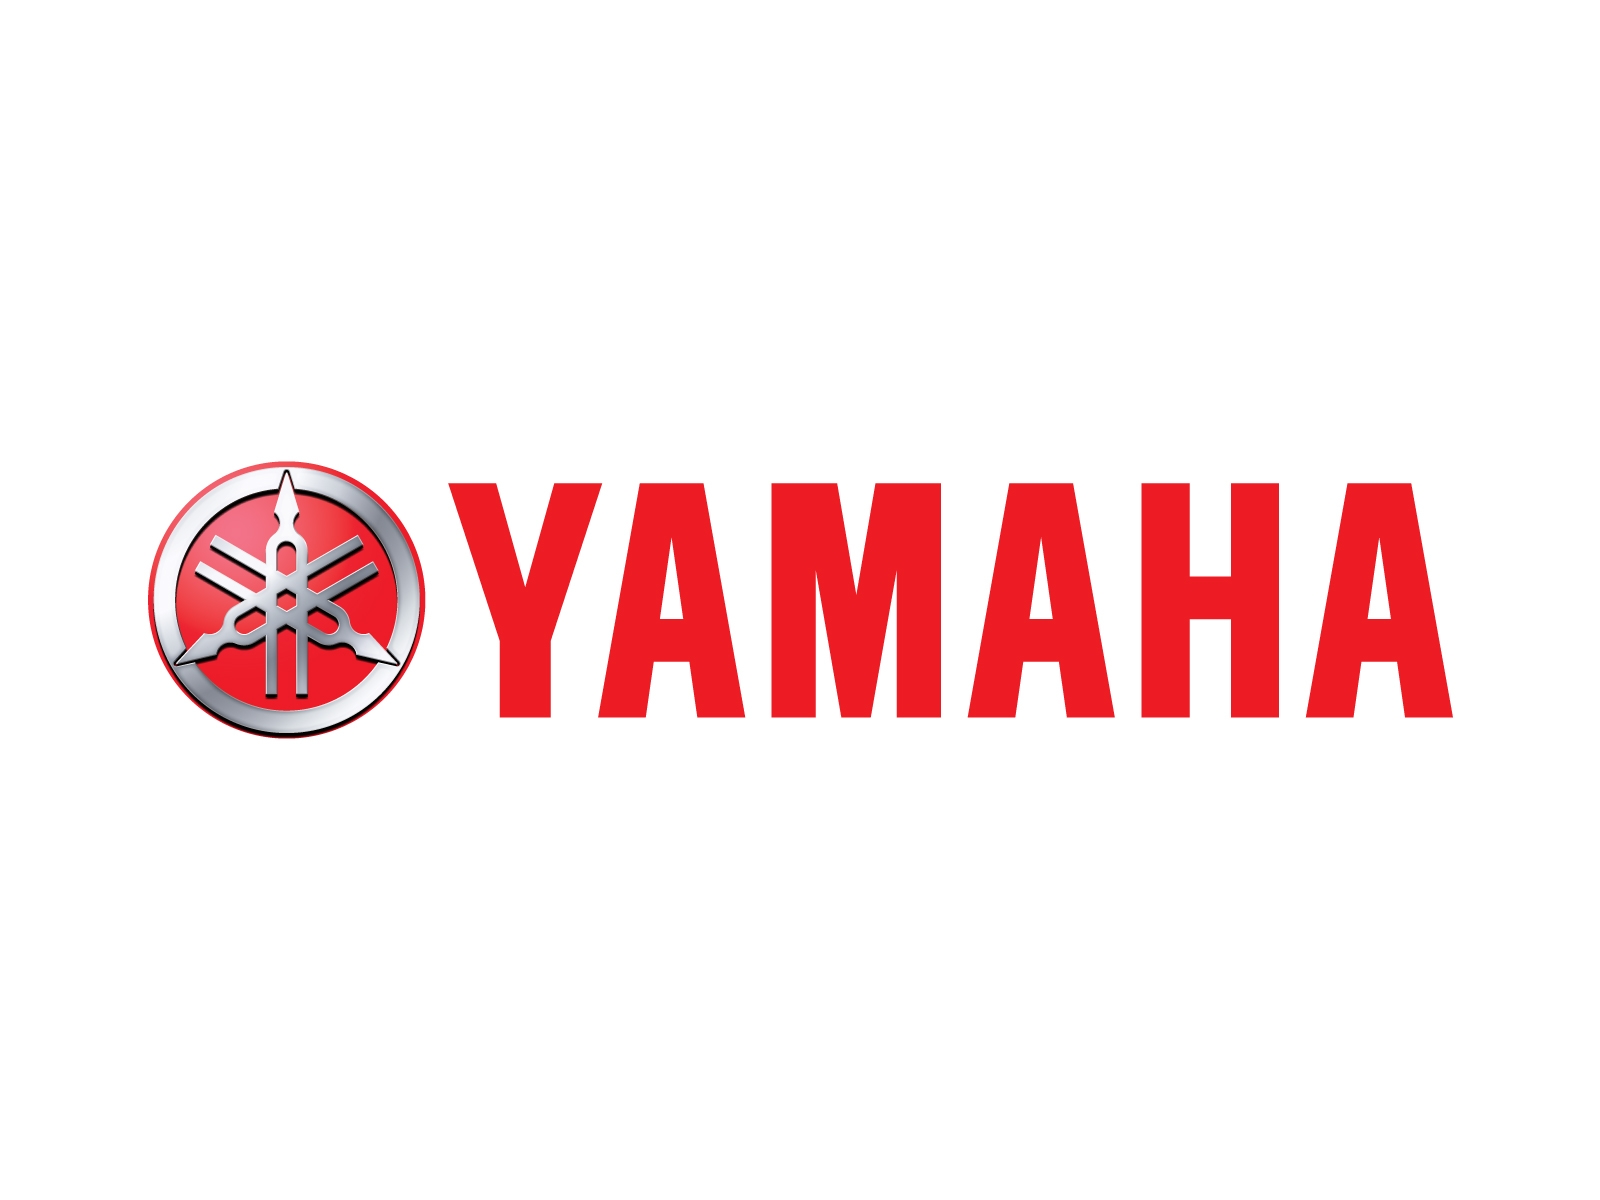  Yamaha Logo WallpapersYamaha R1 Wallpapers and Yamaha R6 Wallpapers